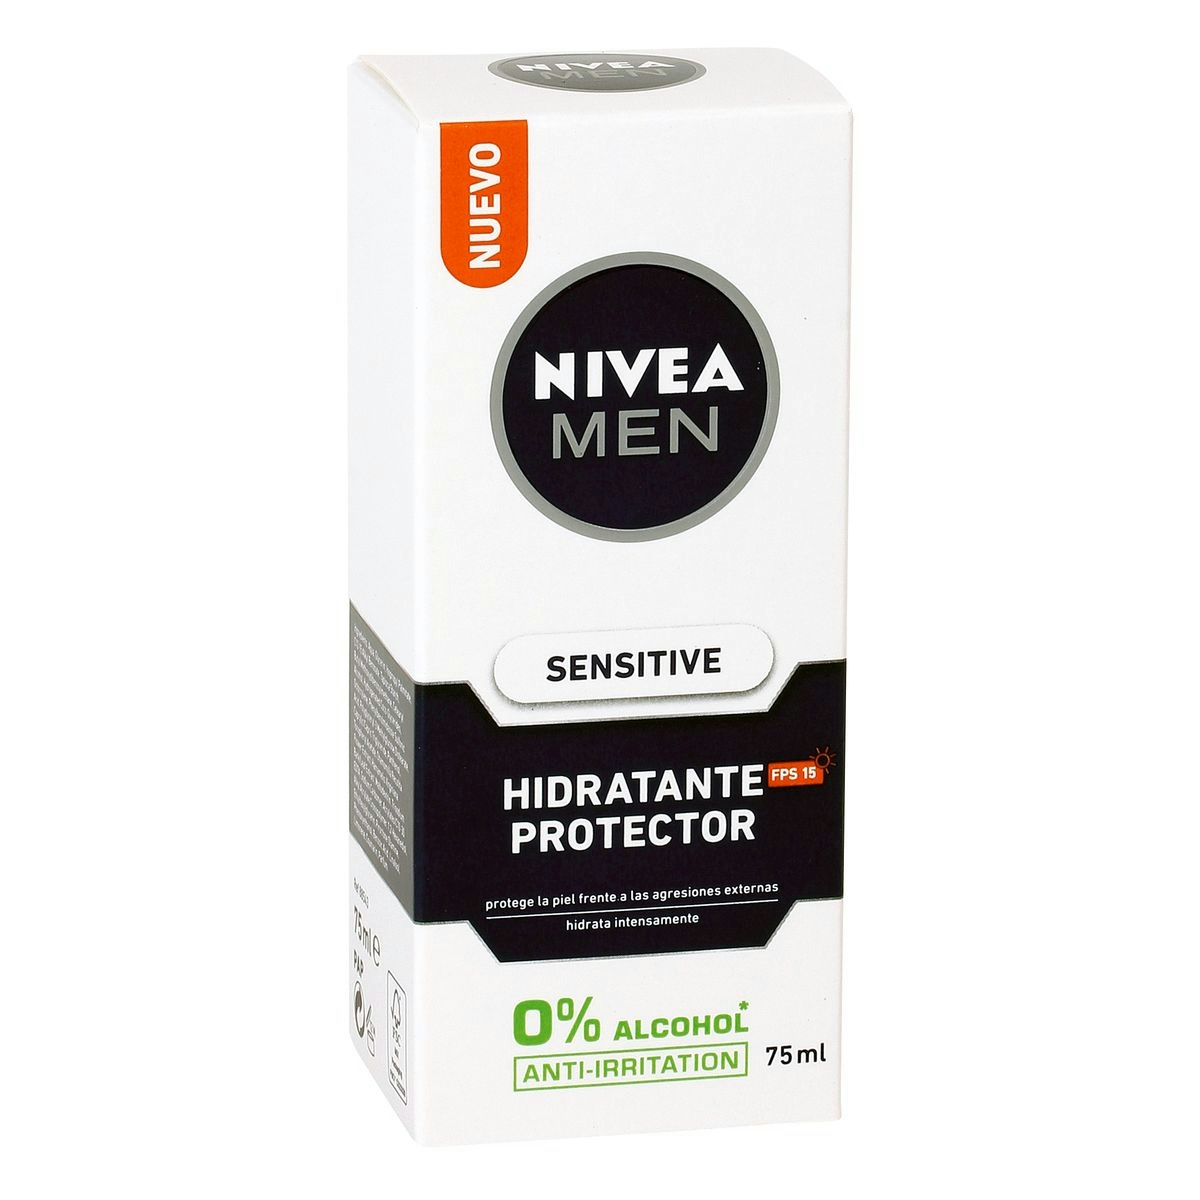 Crema hidratante NIVEA Men protector caja 75 ml